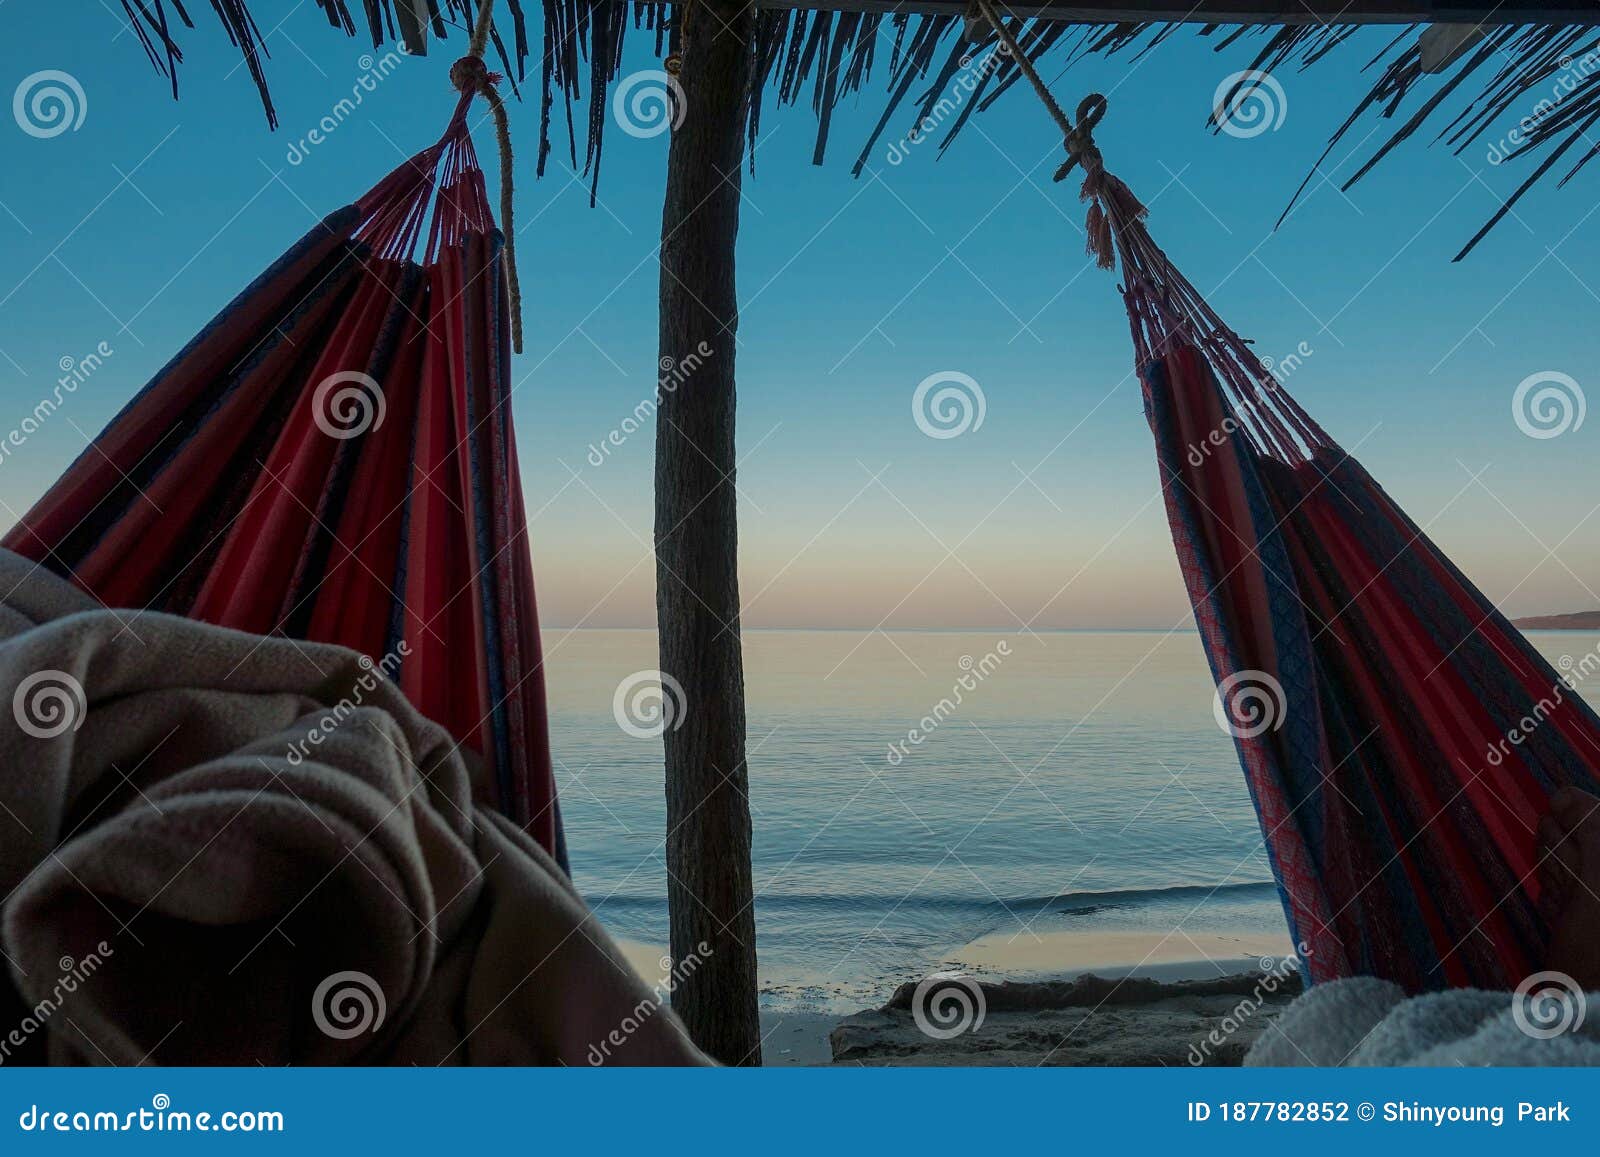 sleeping in a hammock on wayuu beach at cabo de la vela, la guajira, colombia